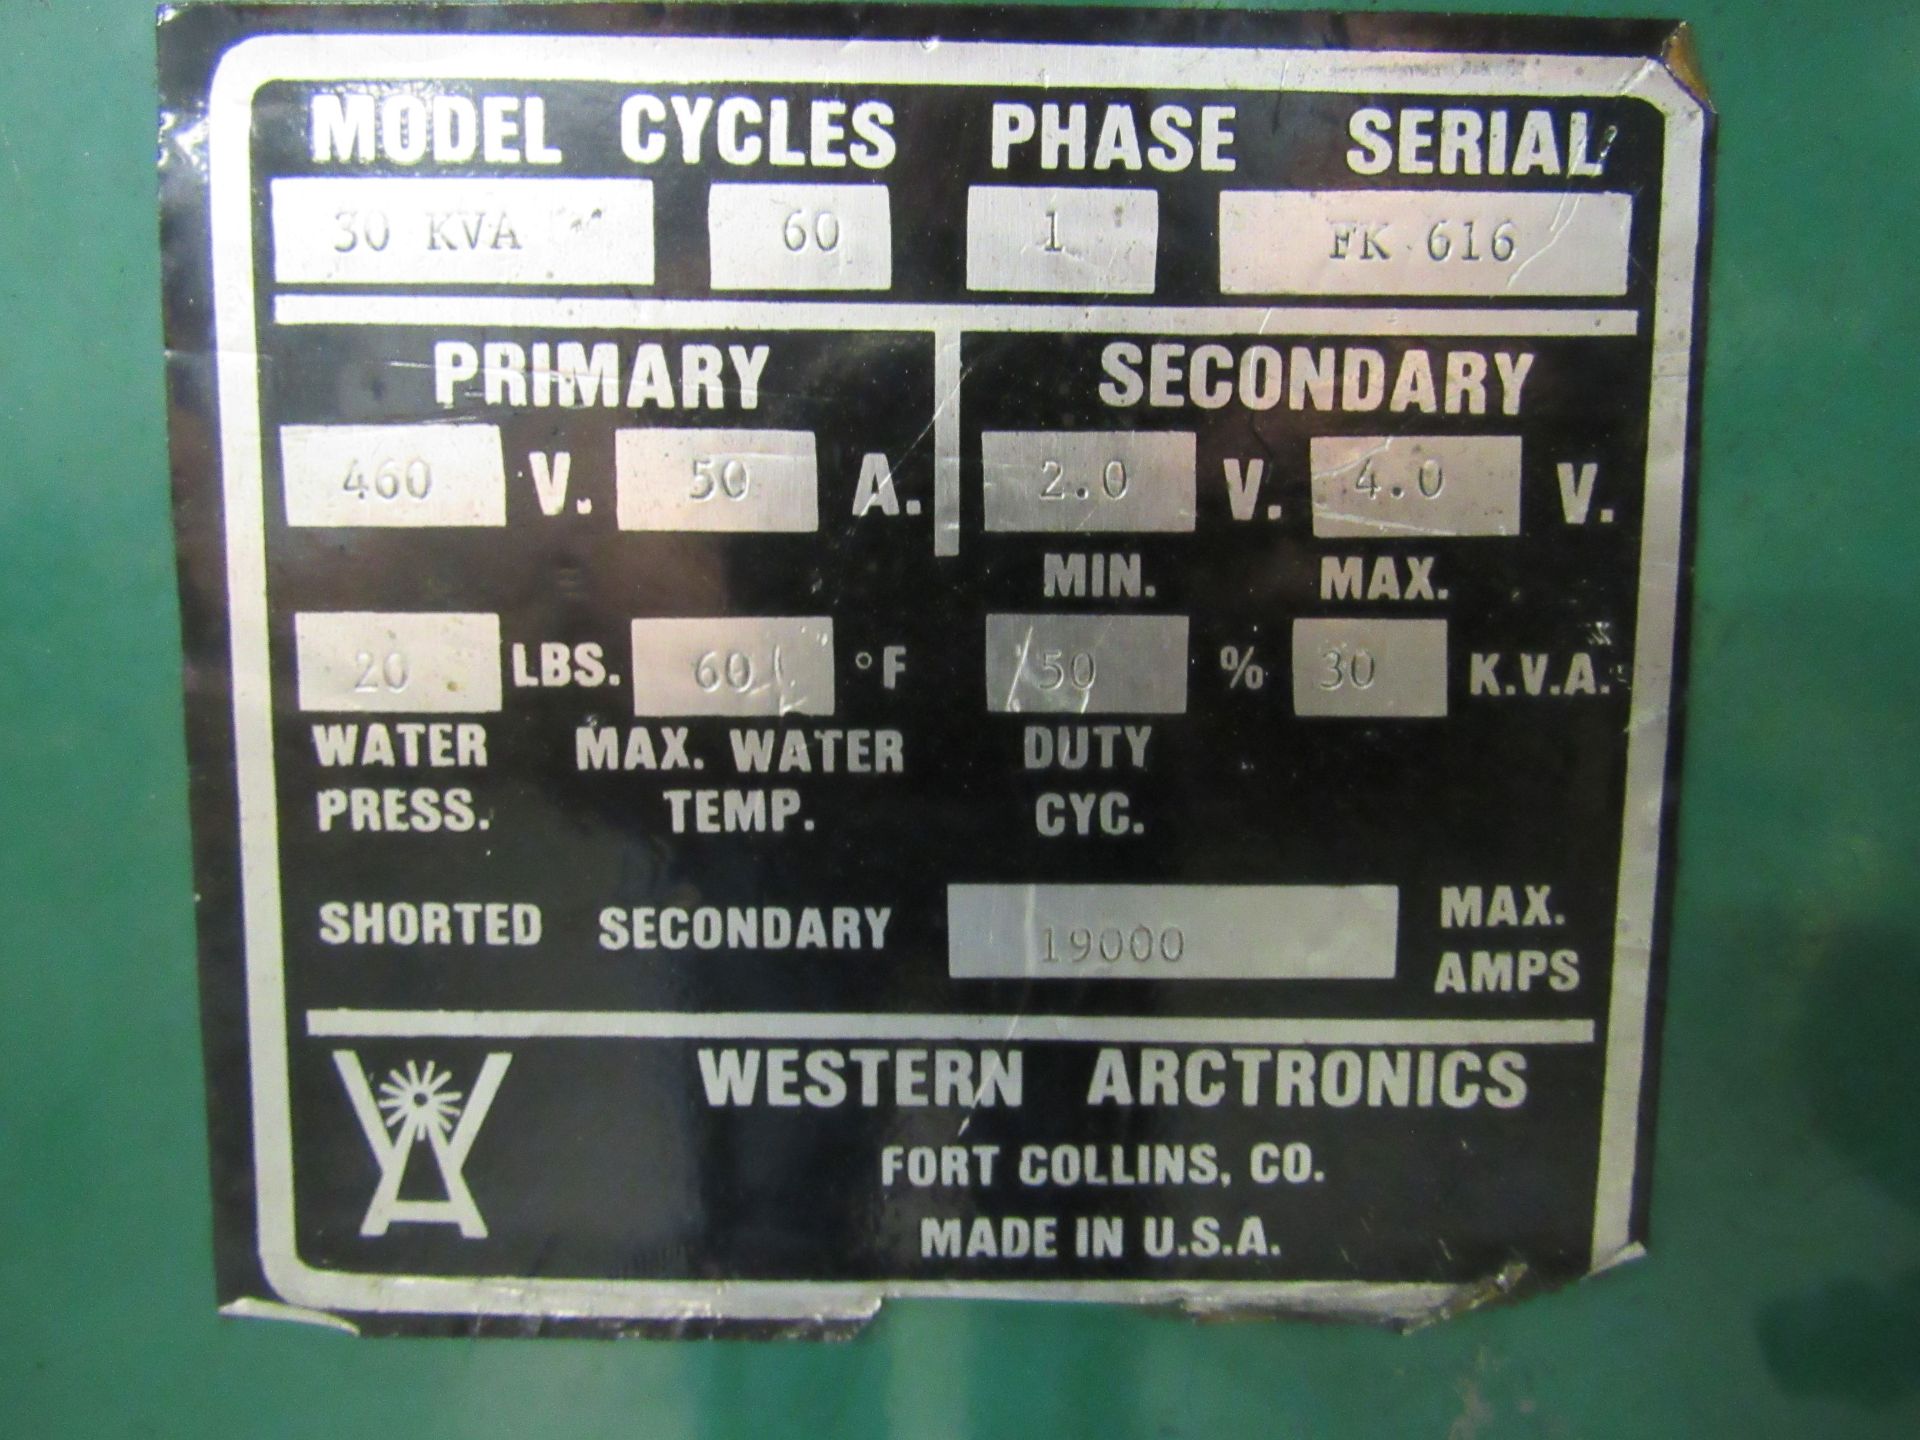 Western Arctronics 30 KVA @ 50% Duty Cycle Resistance Welder - Image 7 of 7